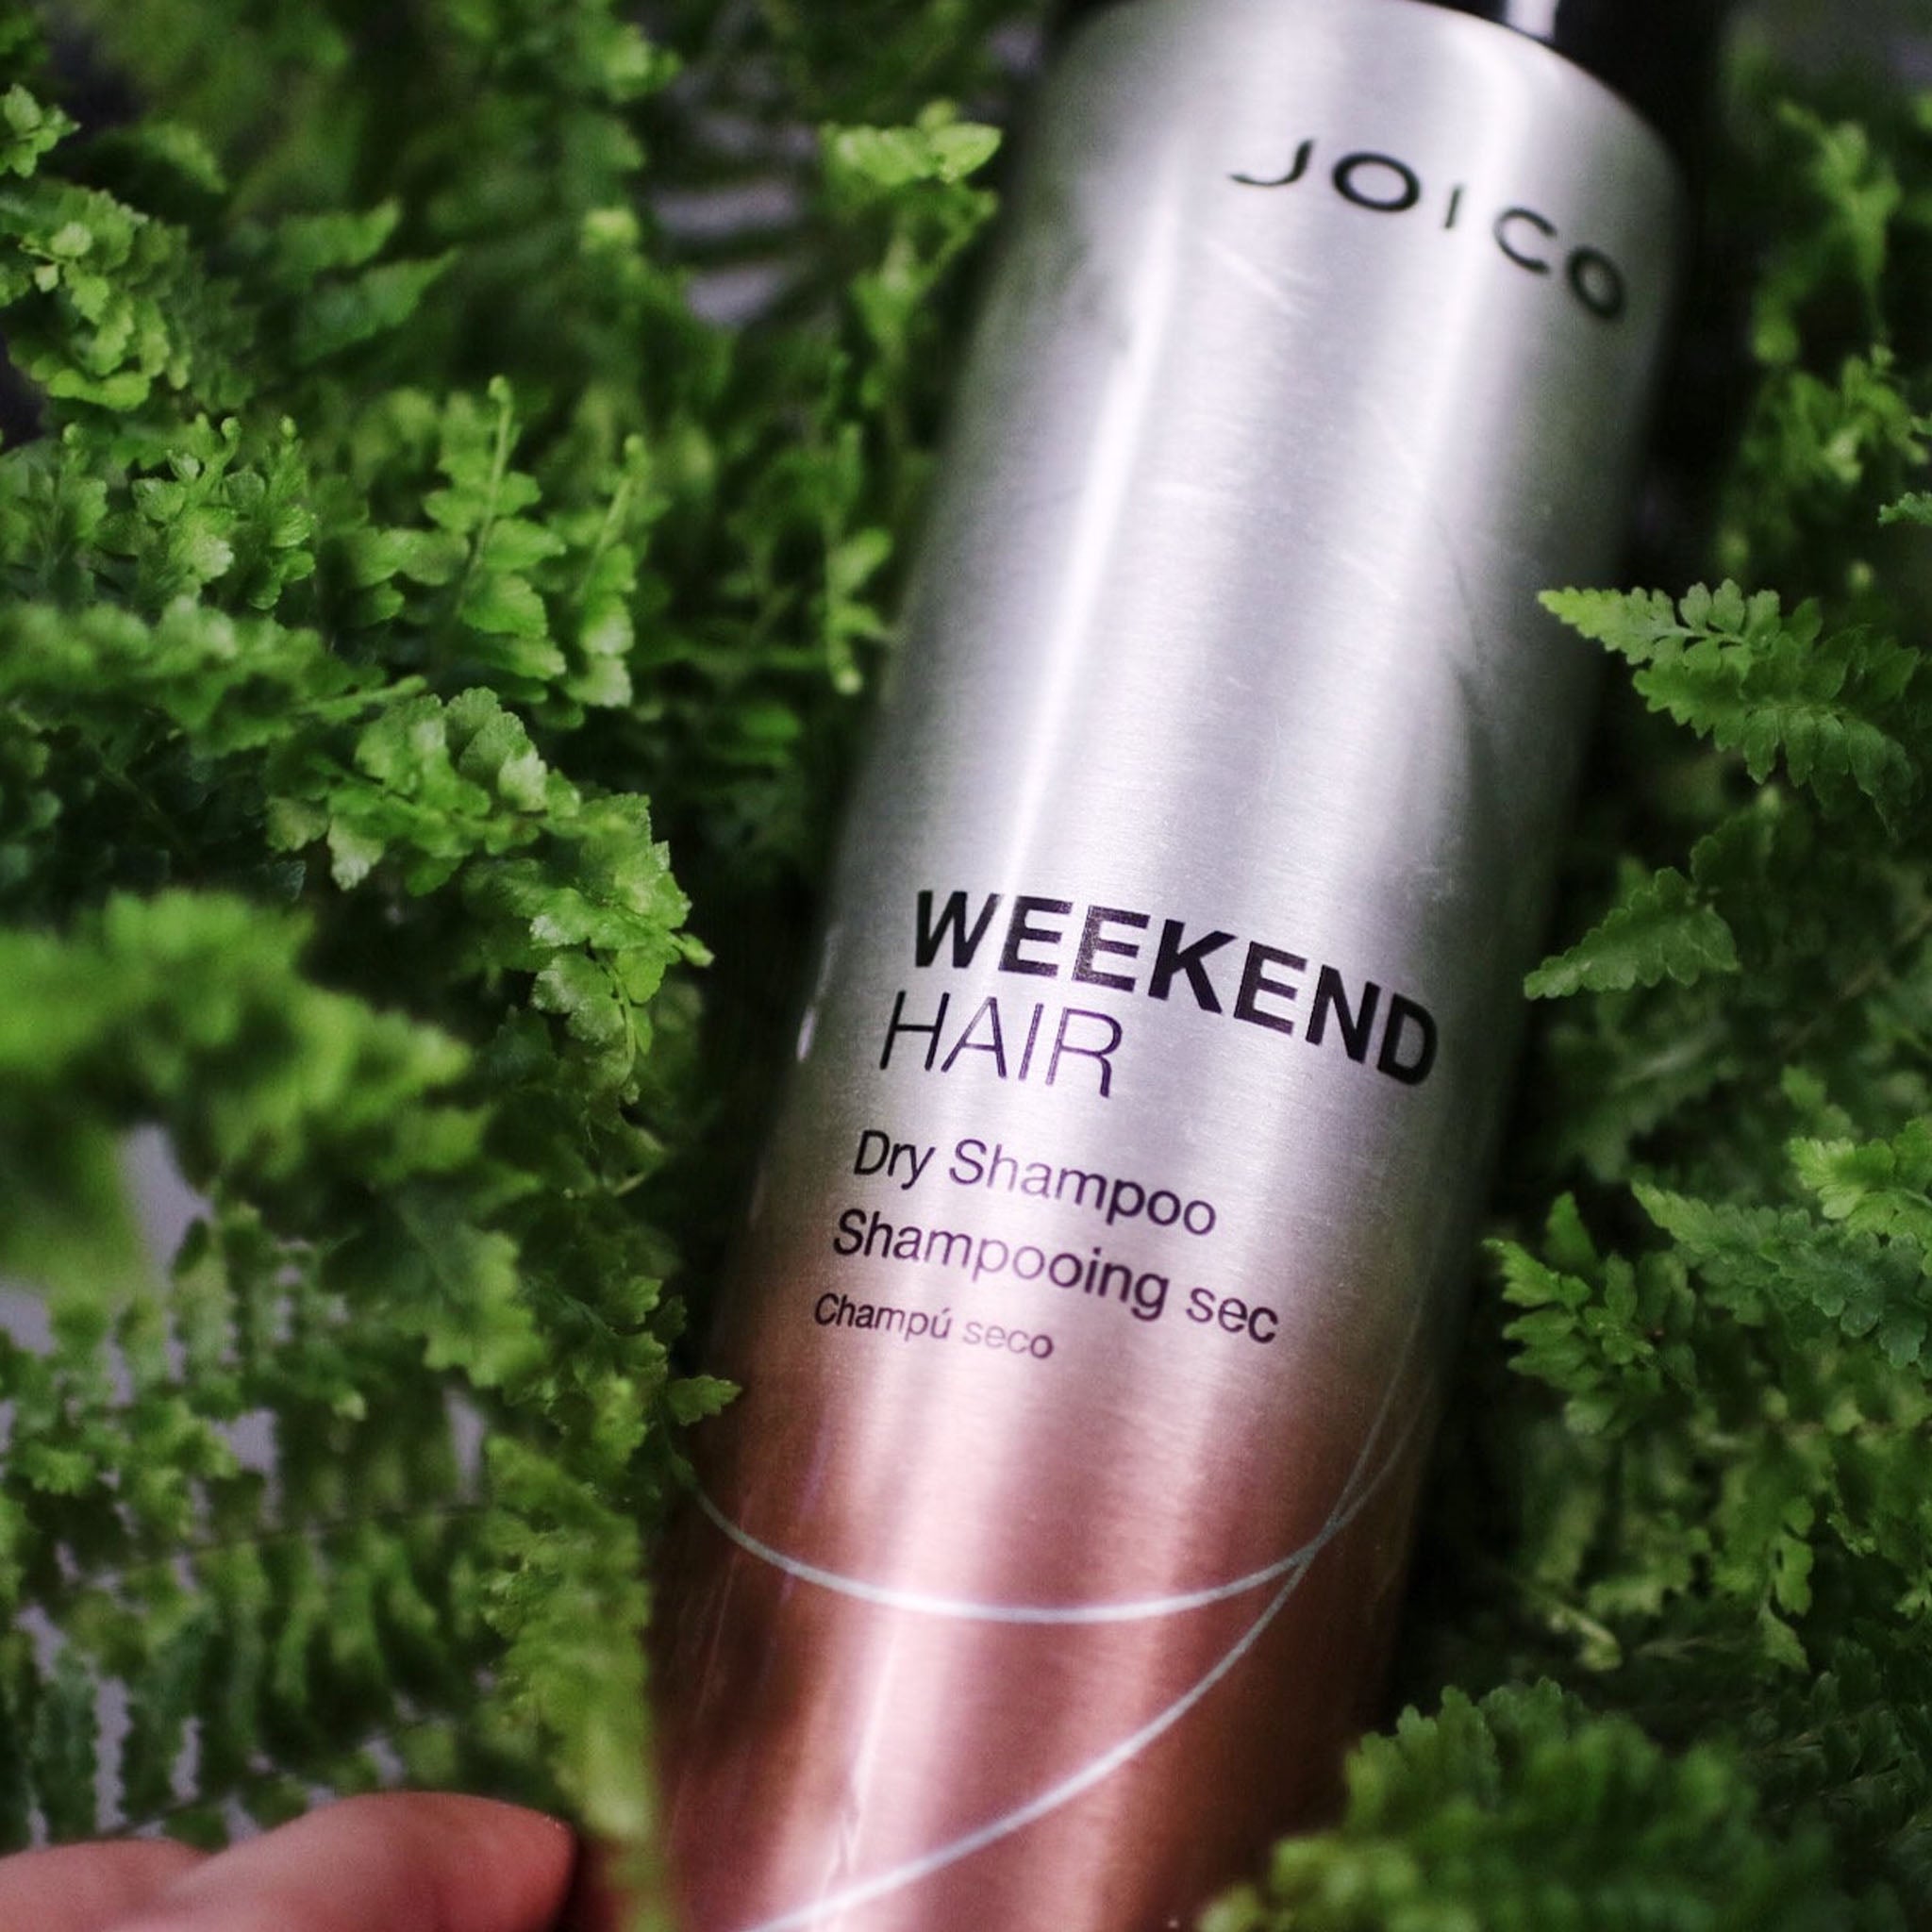 Joico. Shampoing Sec Weekend Hair - 53 ml - Concept C. Shop